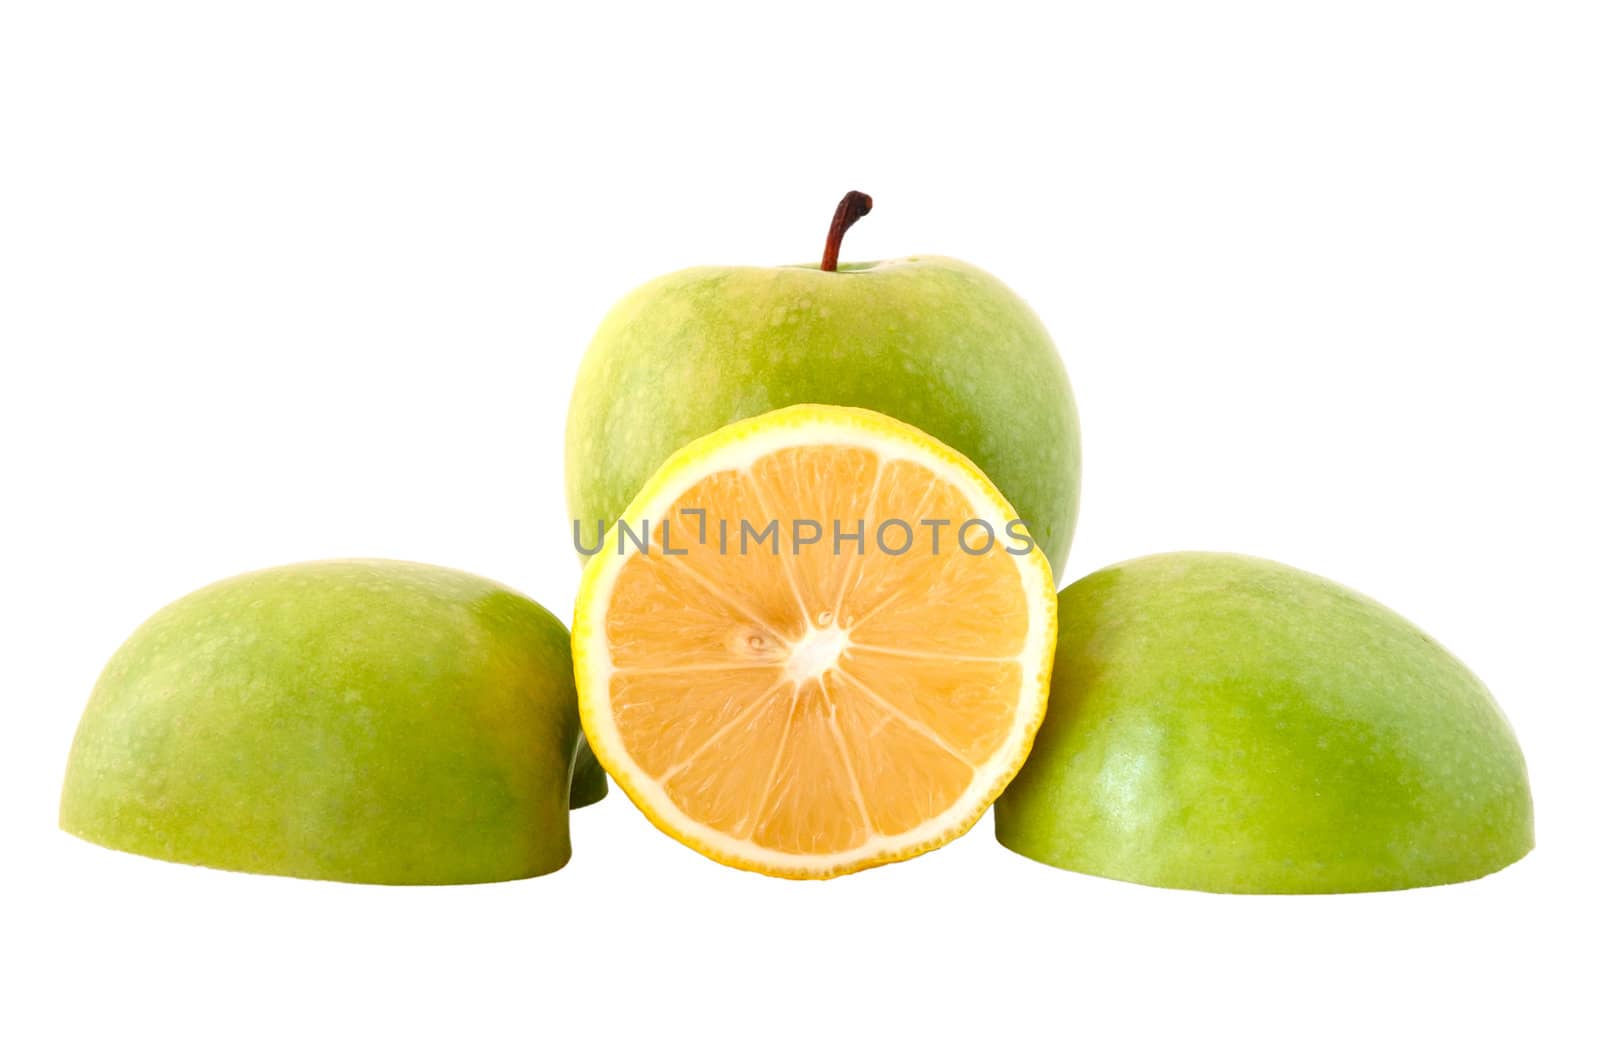 Green apple and acid-yellow lemon on isolated background.